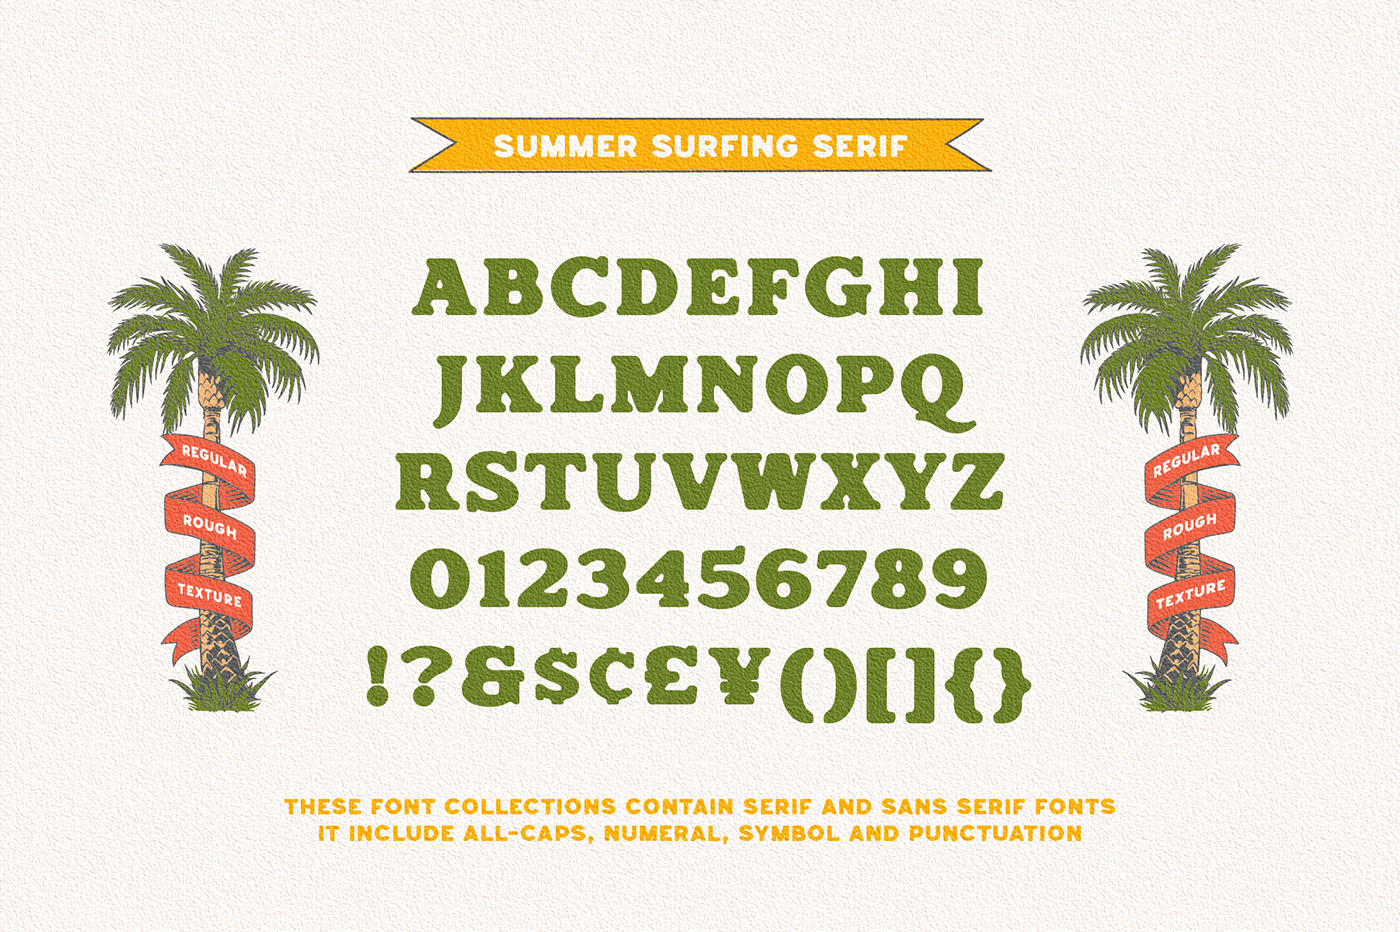 summer fonts serif fonts bold fonts textured fonts stamp fonts beach HAWAII Beach Fonts Rustic fonts Surf Fonts